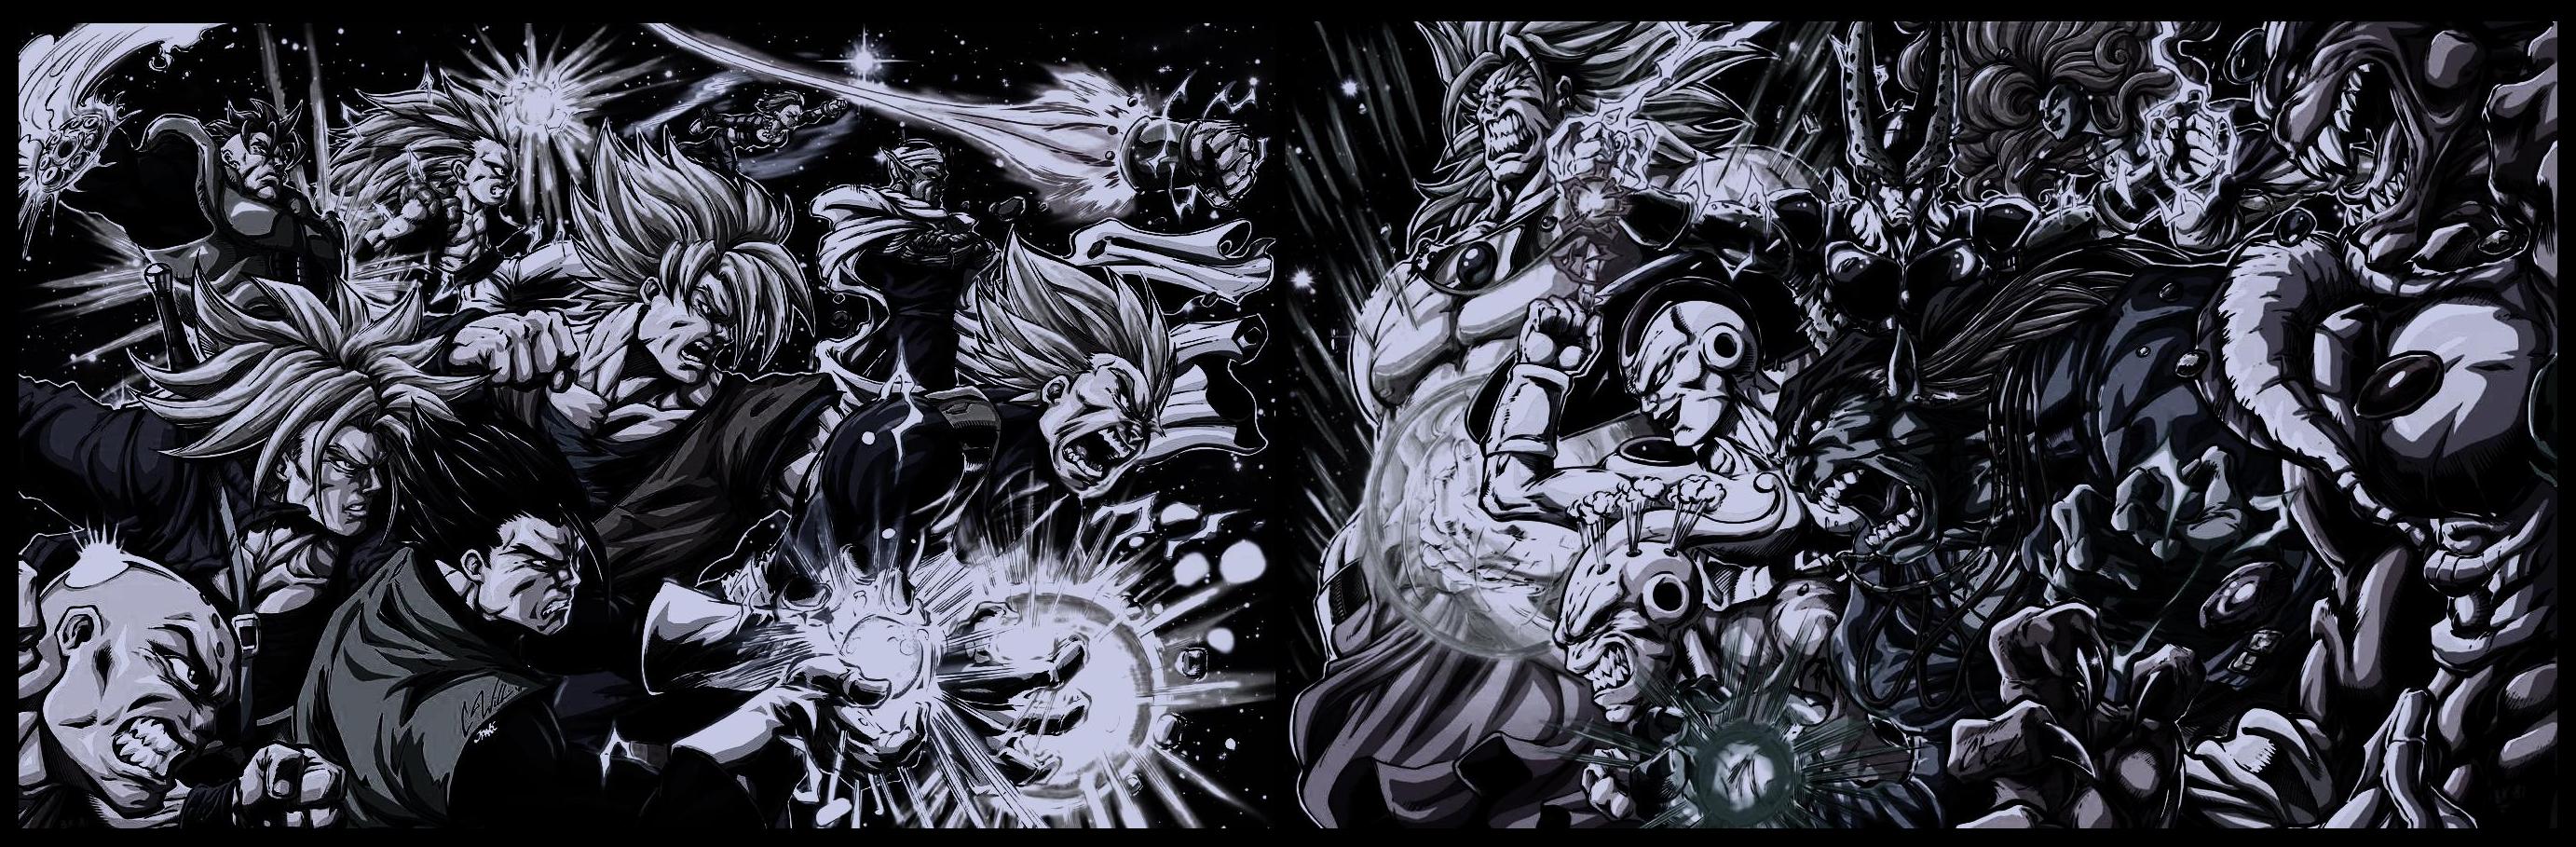 Dbz Saiyans Vs Enemies All Characters Gotham Hd Wallpaper - Dragon Ball Z Heroes Vs Villains - HD Wallpaper 